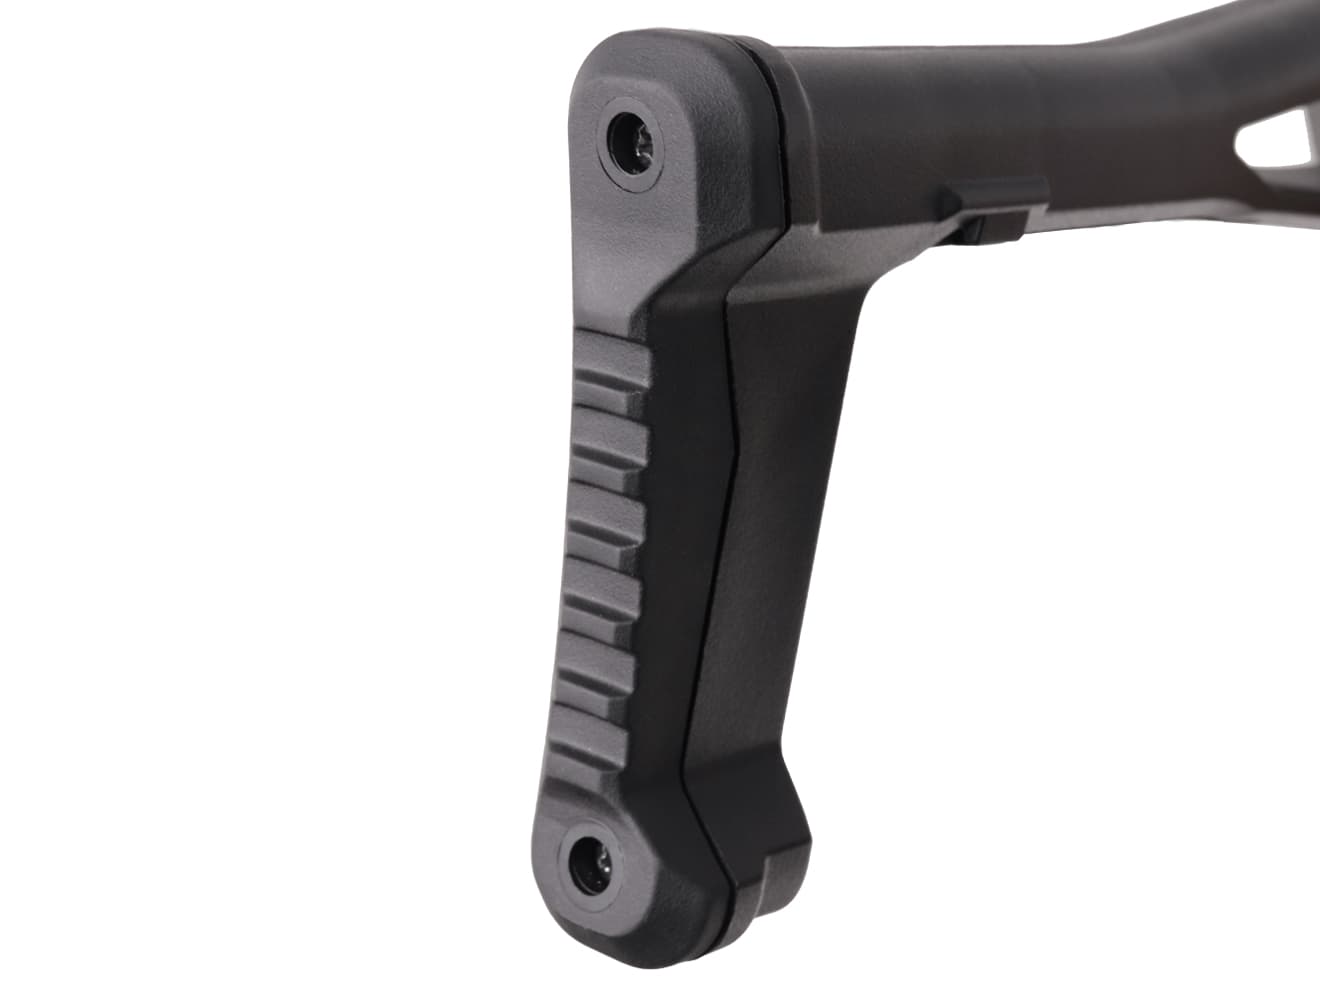 CAA Airsoft MICRO RONI ピストル カービン コンバージョンキット for Glock